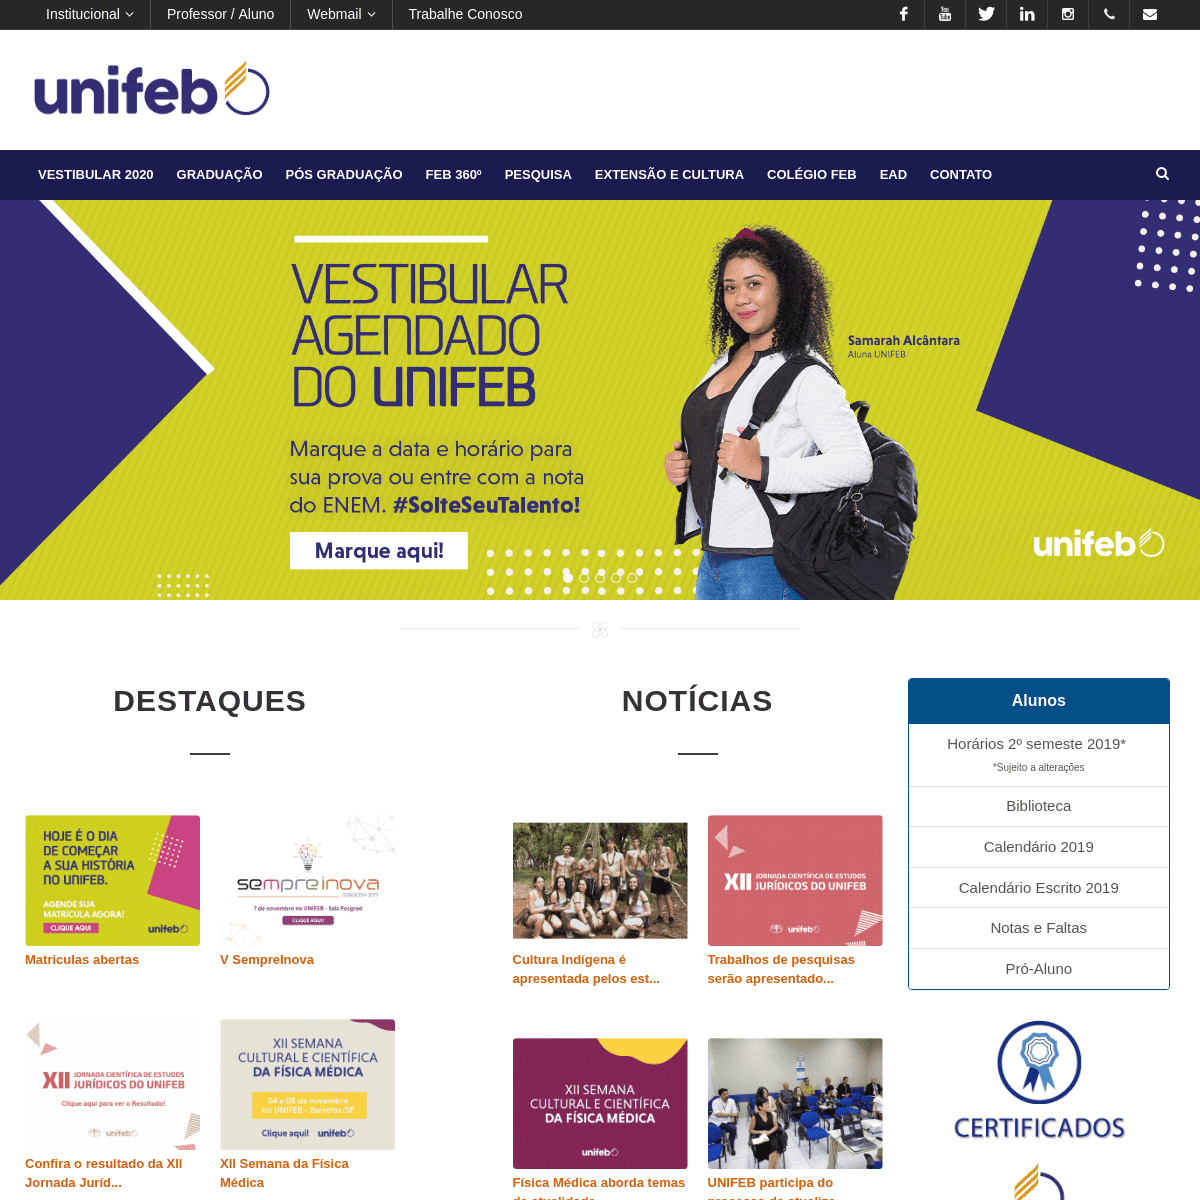 A complete backup of unifeb.edu.br